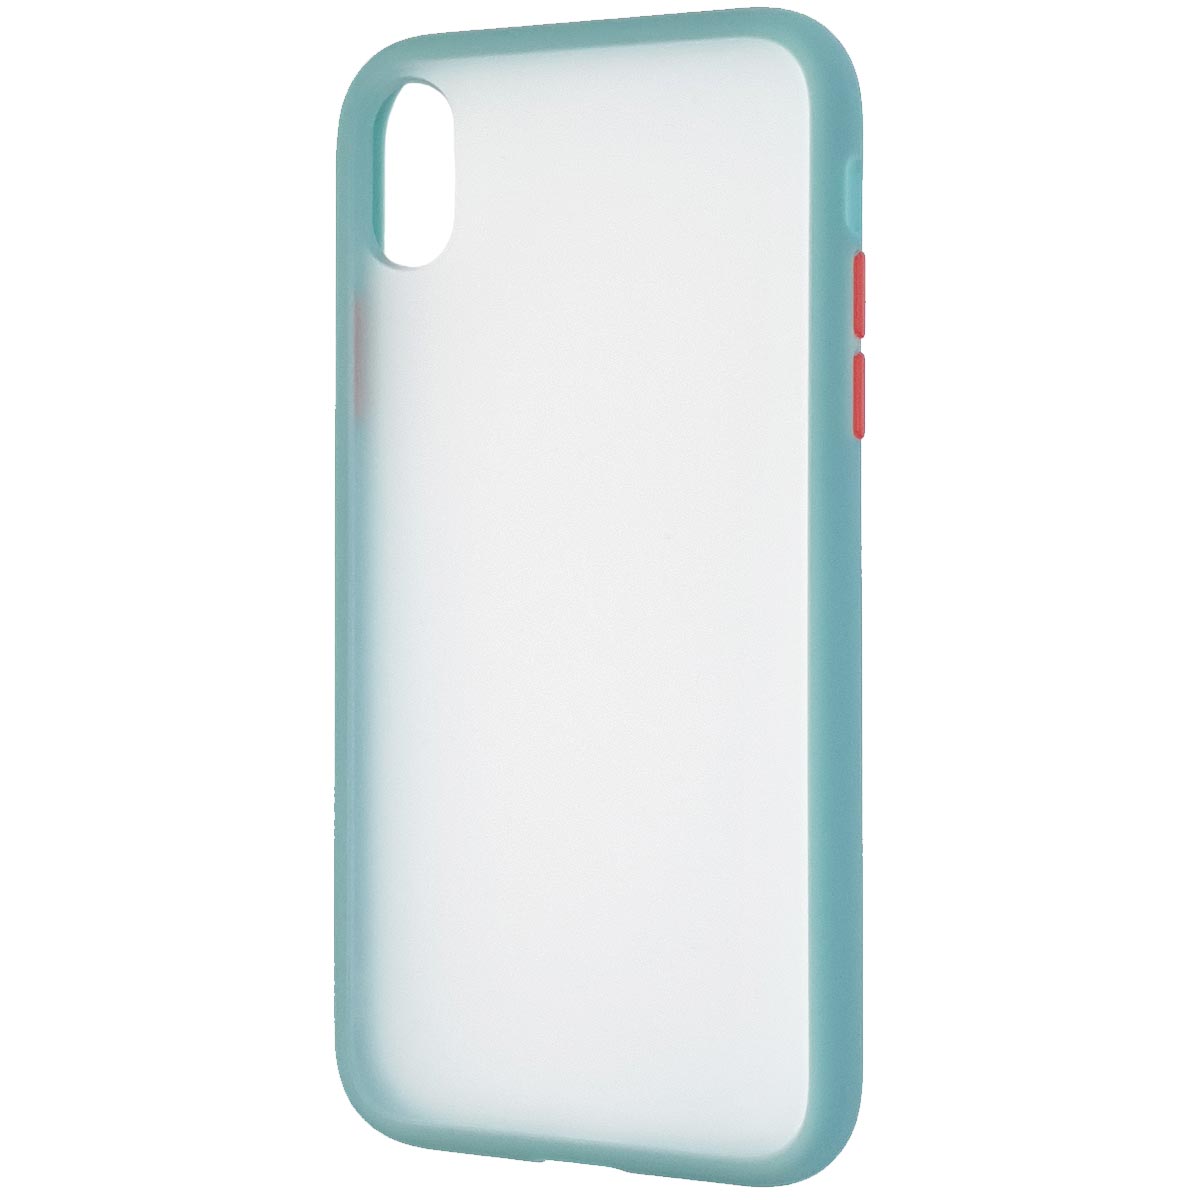 Чехол накладка SKIN SHELL для APPLE iPhone XR, силикон, пластик, цвет окантовки бирюзовый